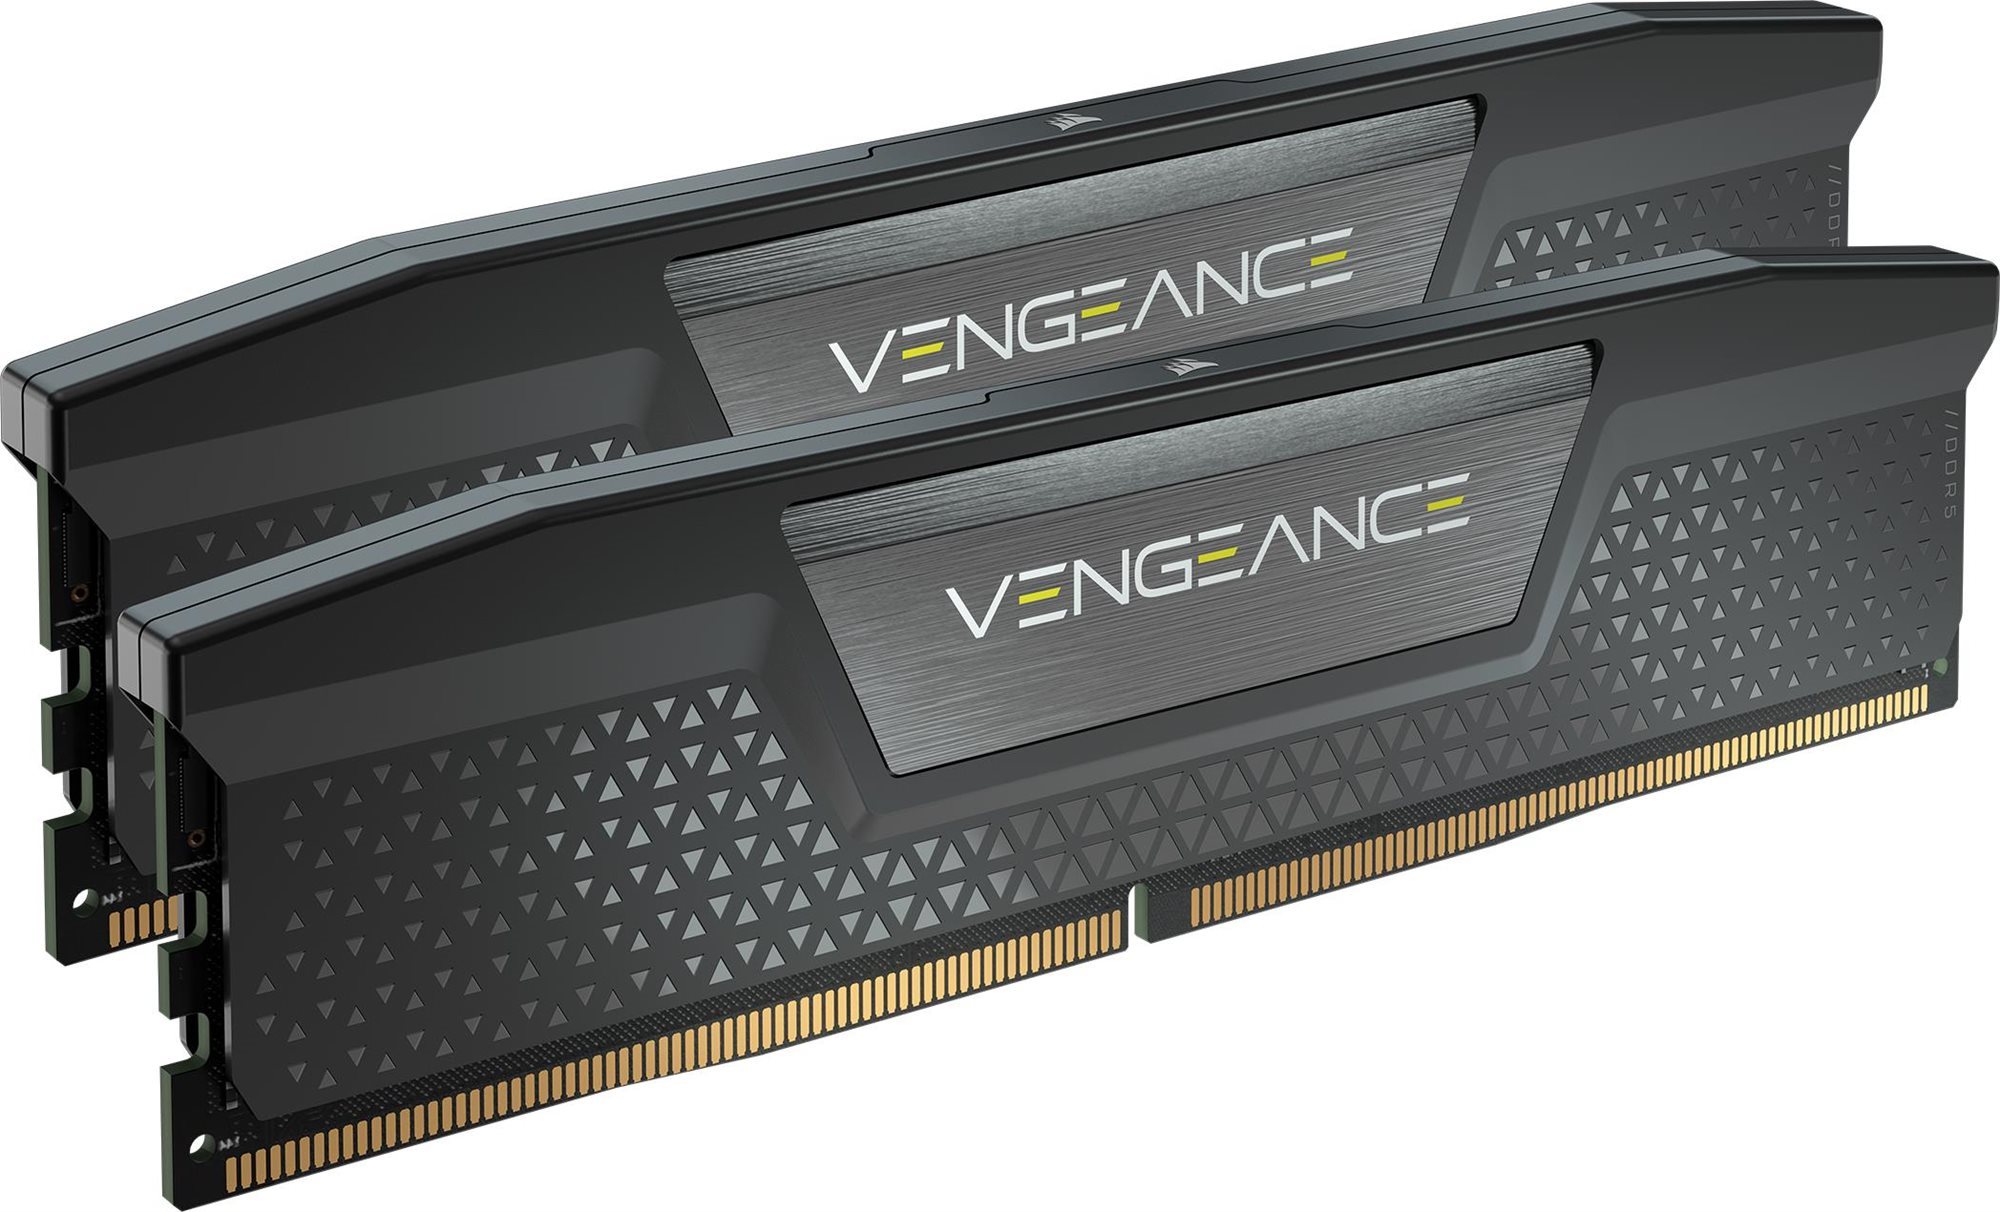 RAM memória Corsair 32GB KIT DDR5 7200MHz CL34 Vengeance Black